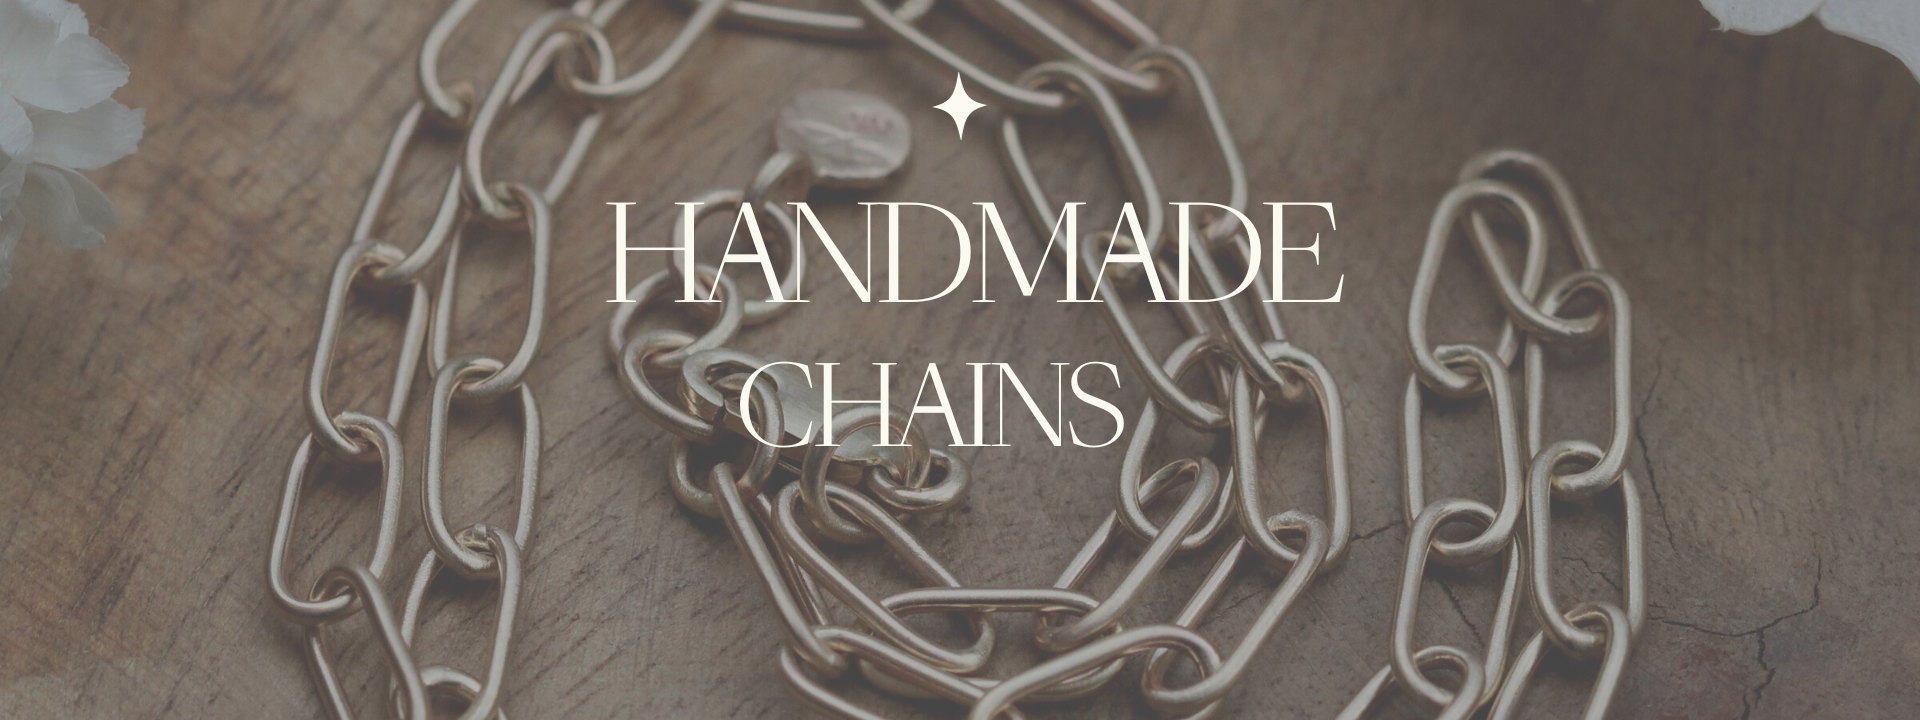 handmade chains